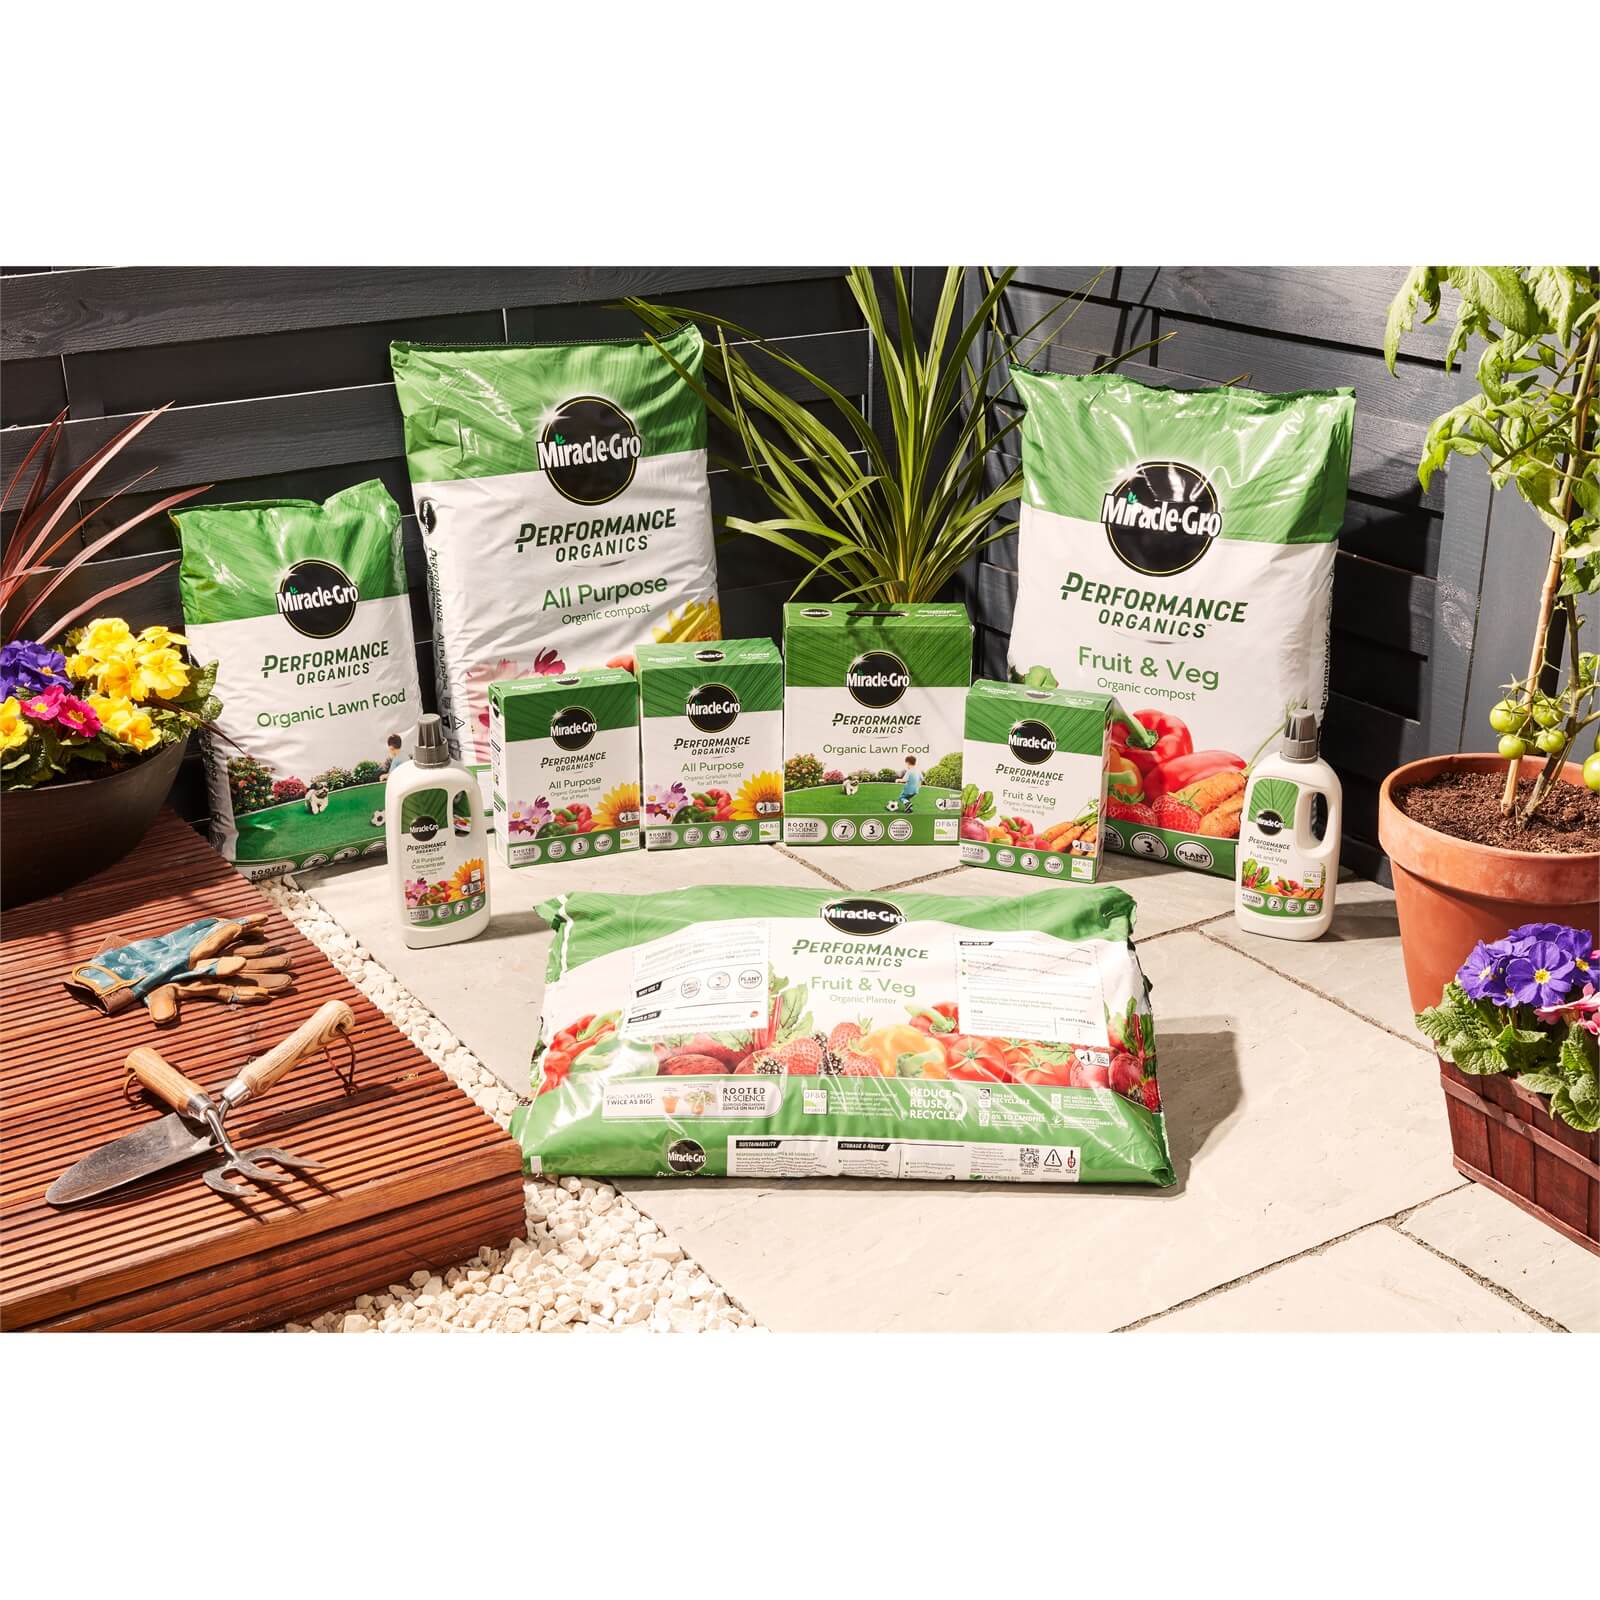 Miracle-Gro Performance Organics Fruit & Veg Food - 1kg